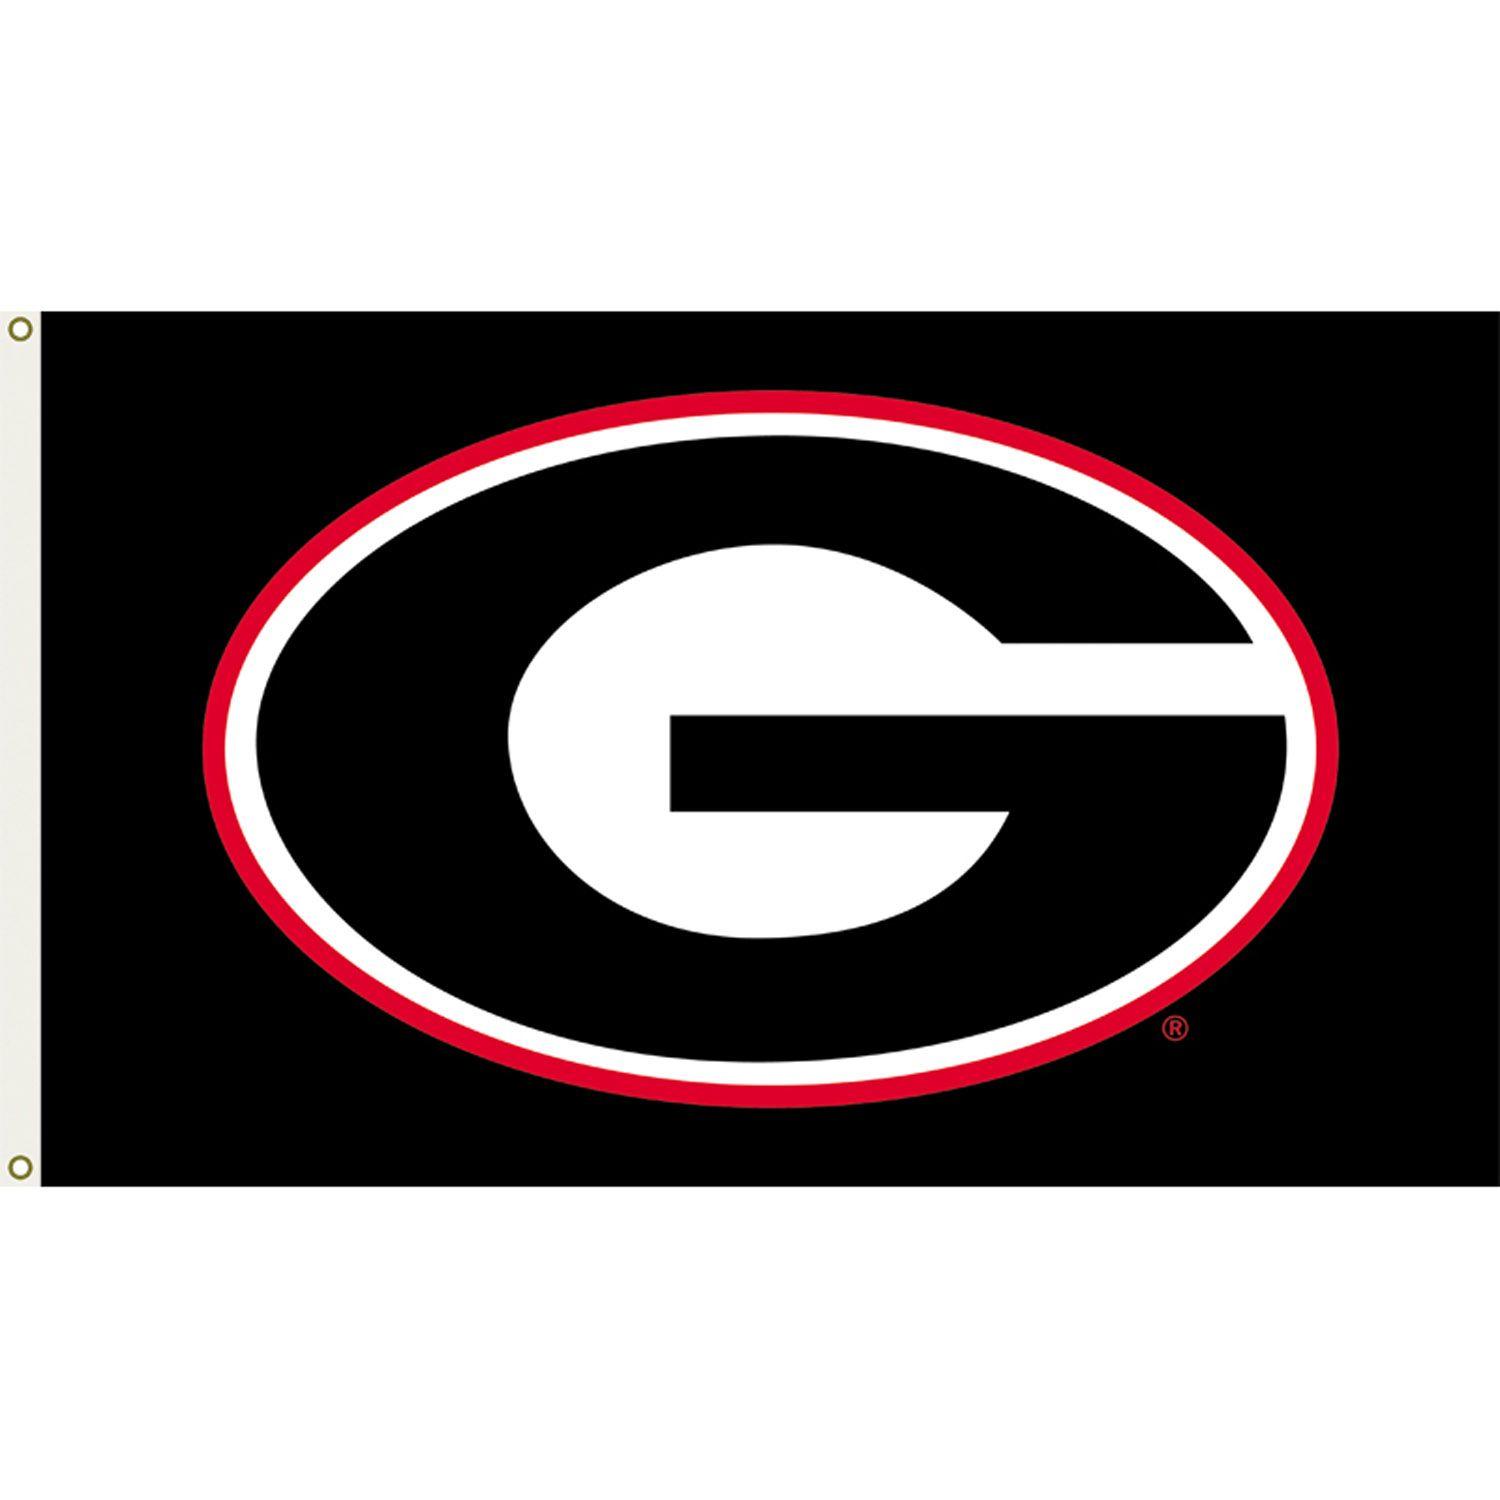 Red and Black G Logo - Georgia g Logos